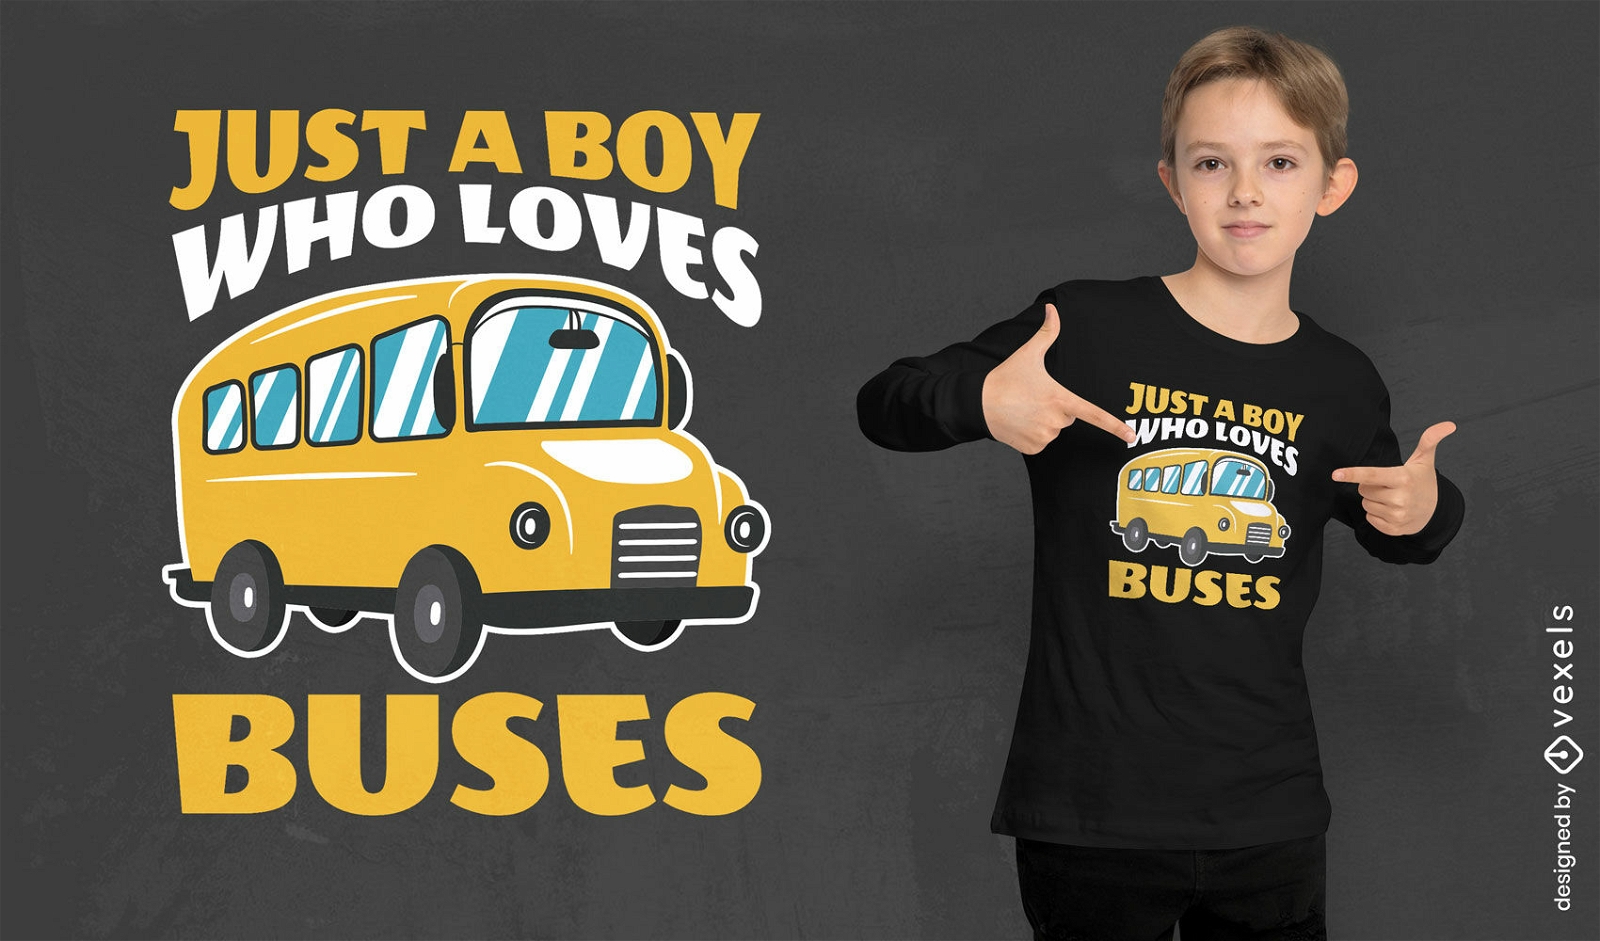 Boy who loves buses t-shirt design